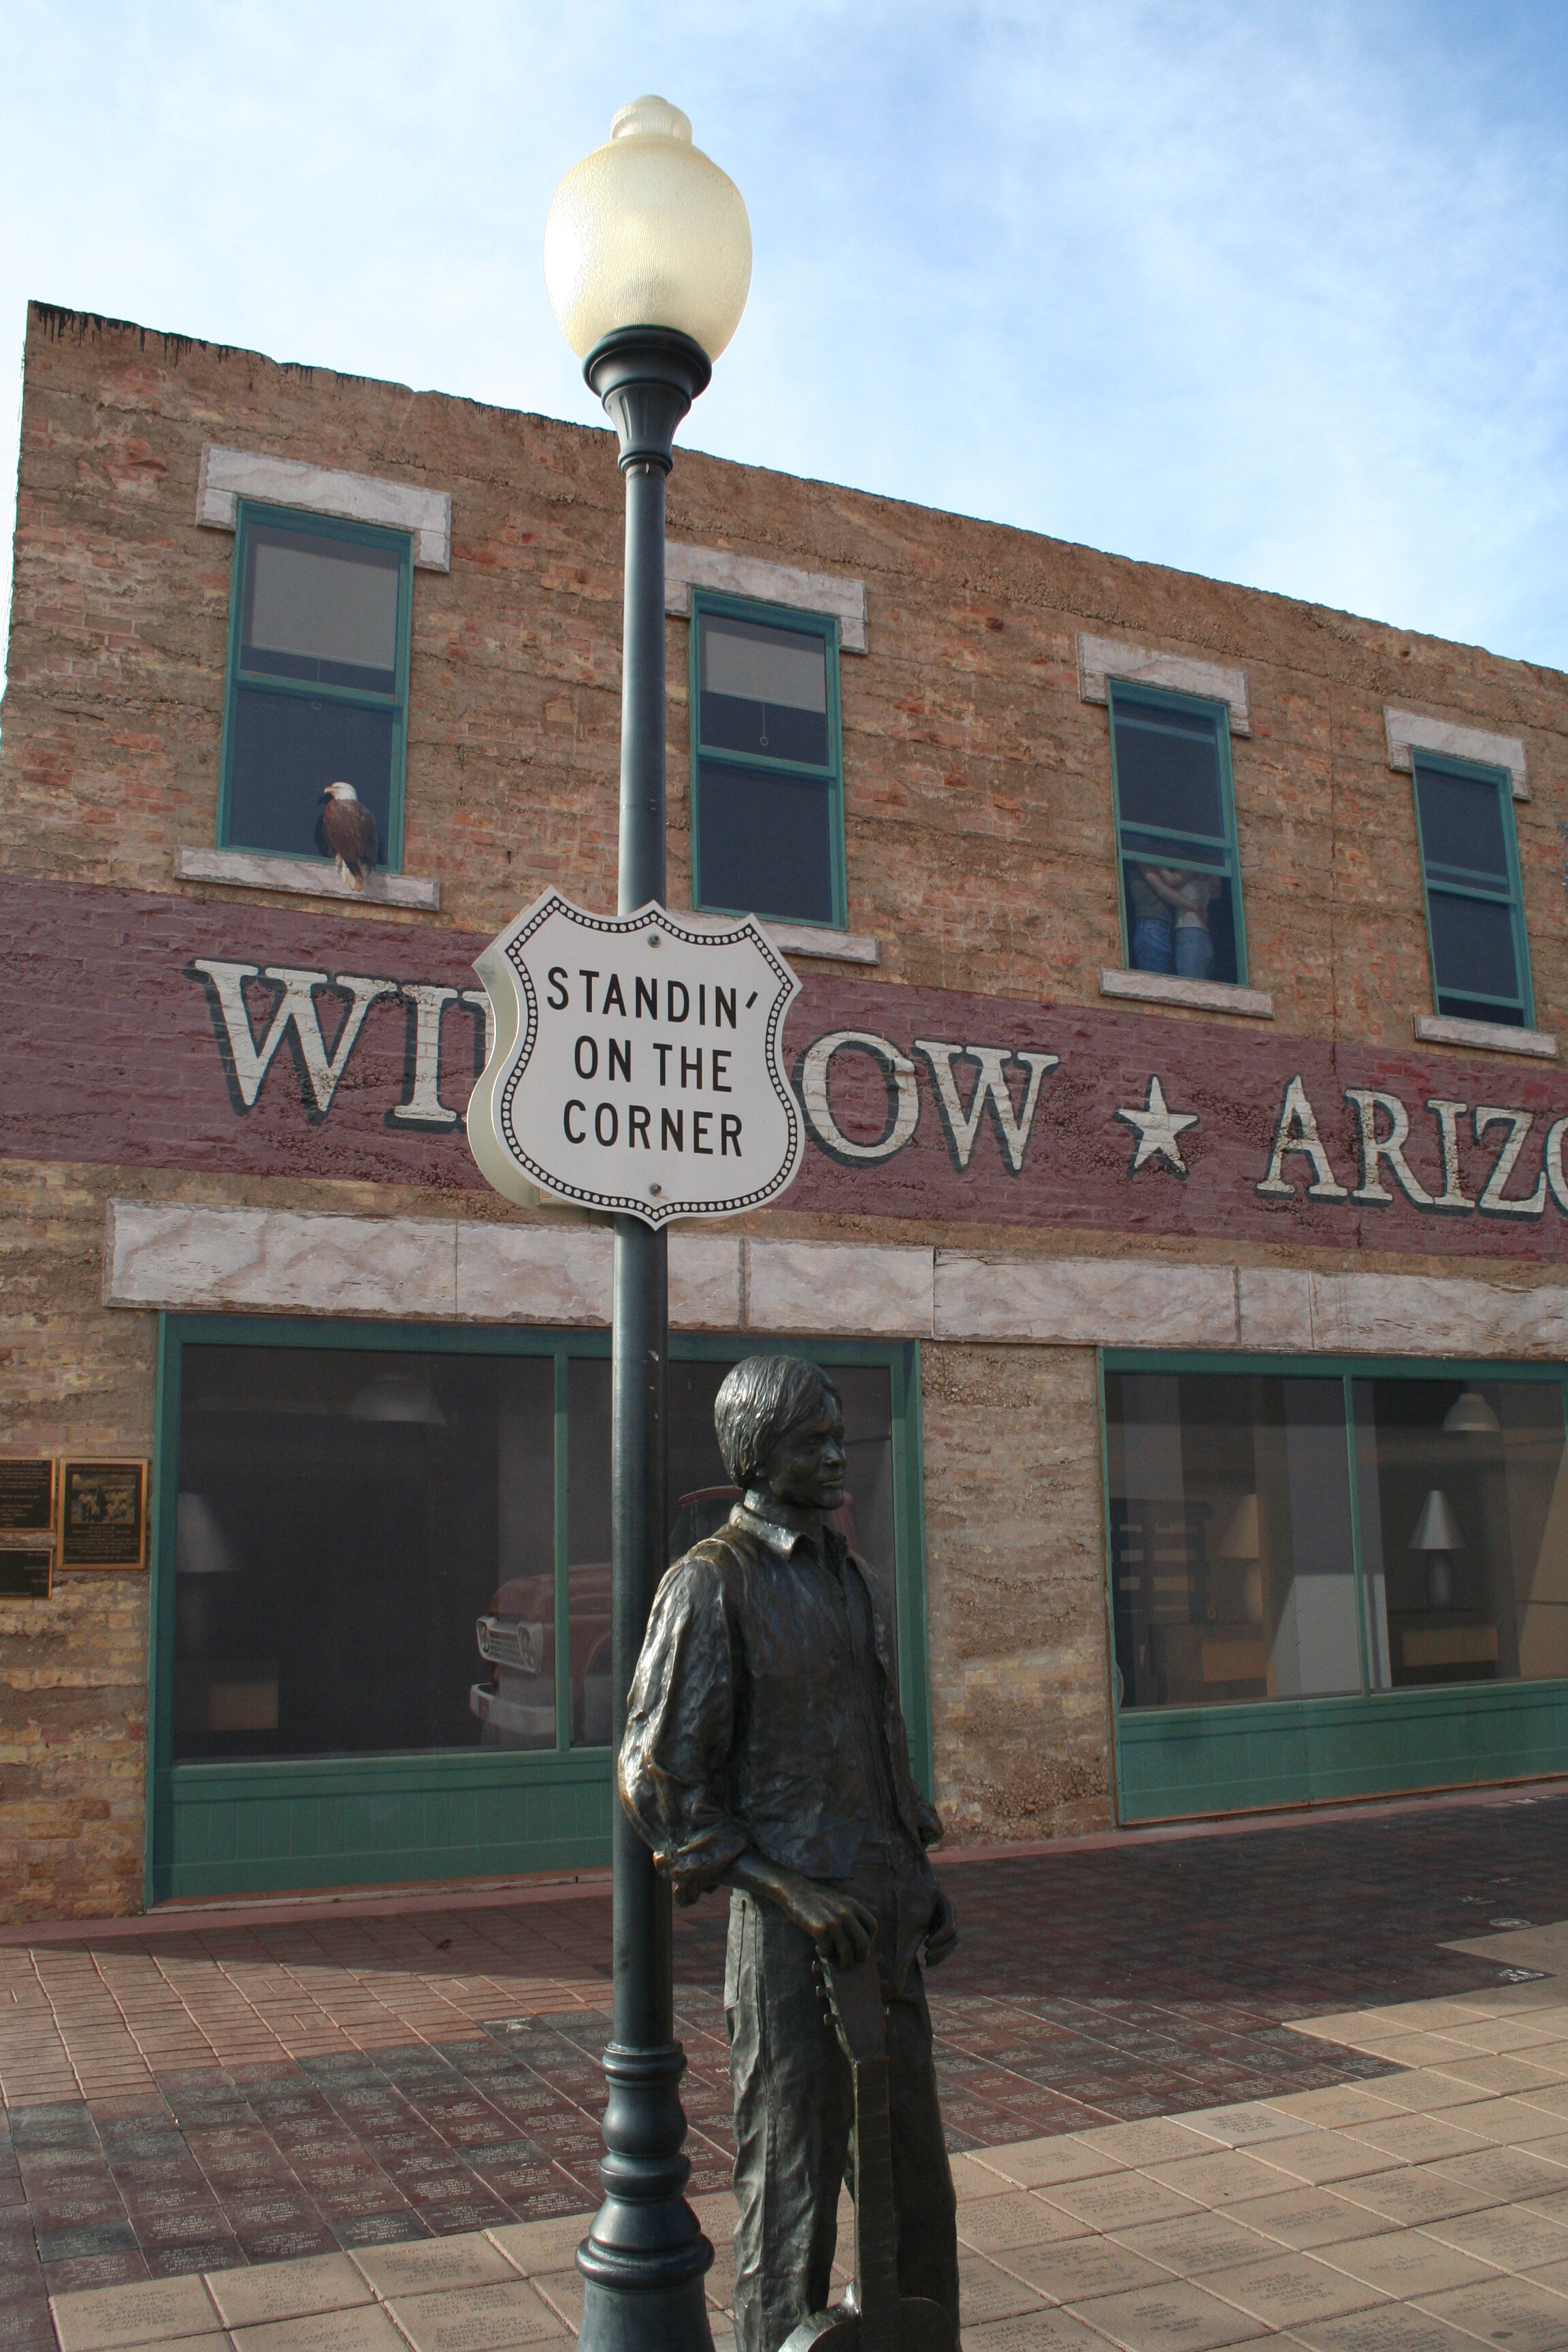   “Standin’ on the corner” in Winslow, Arizona.  